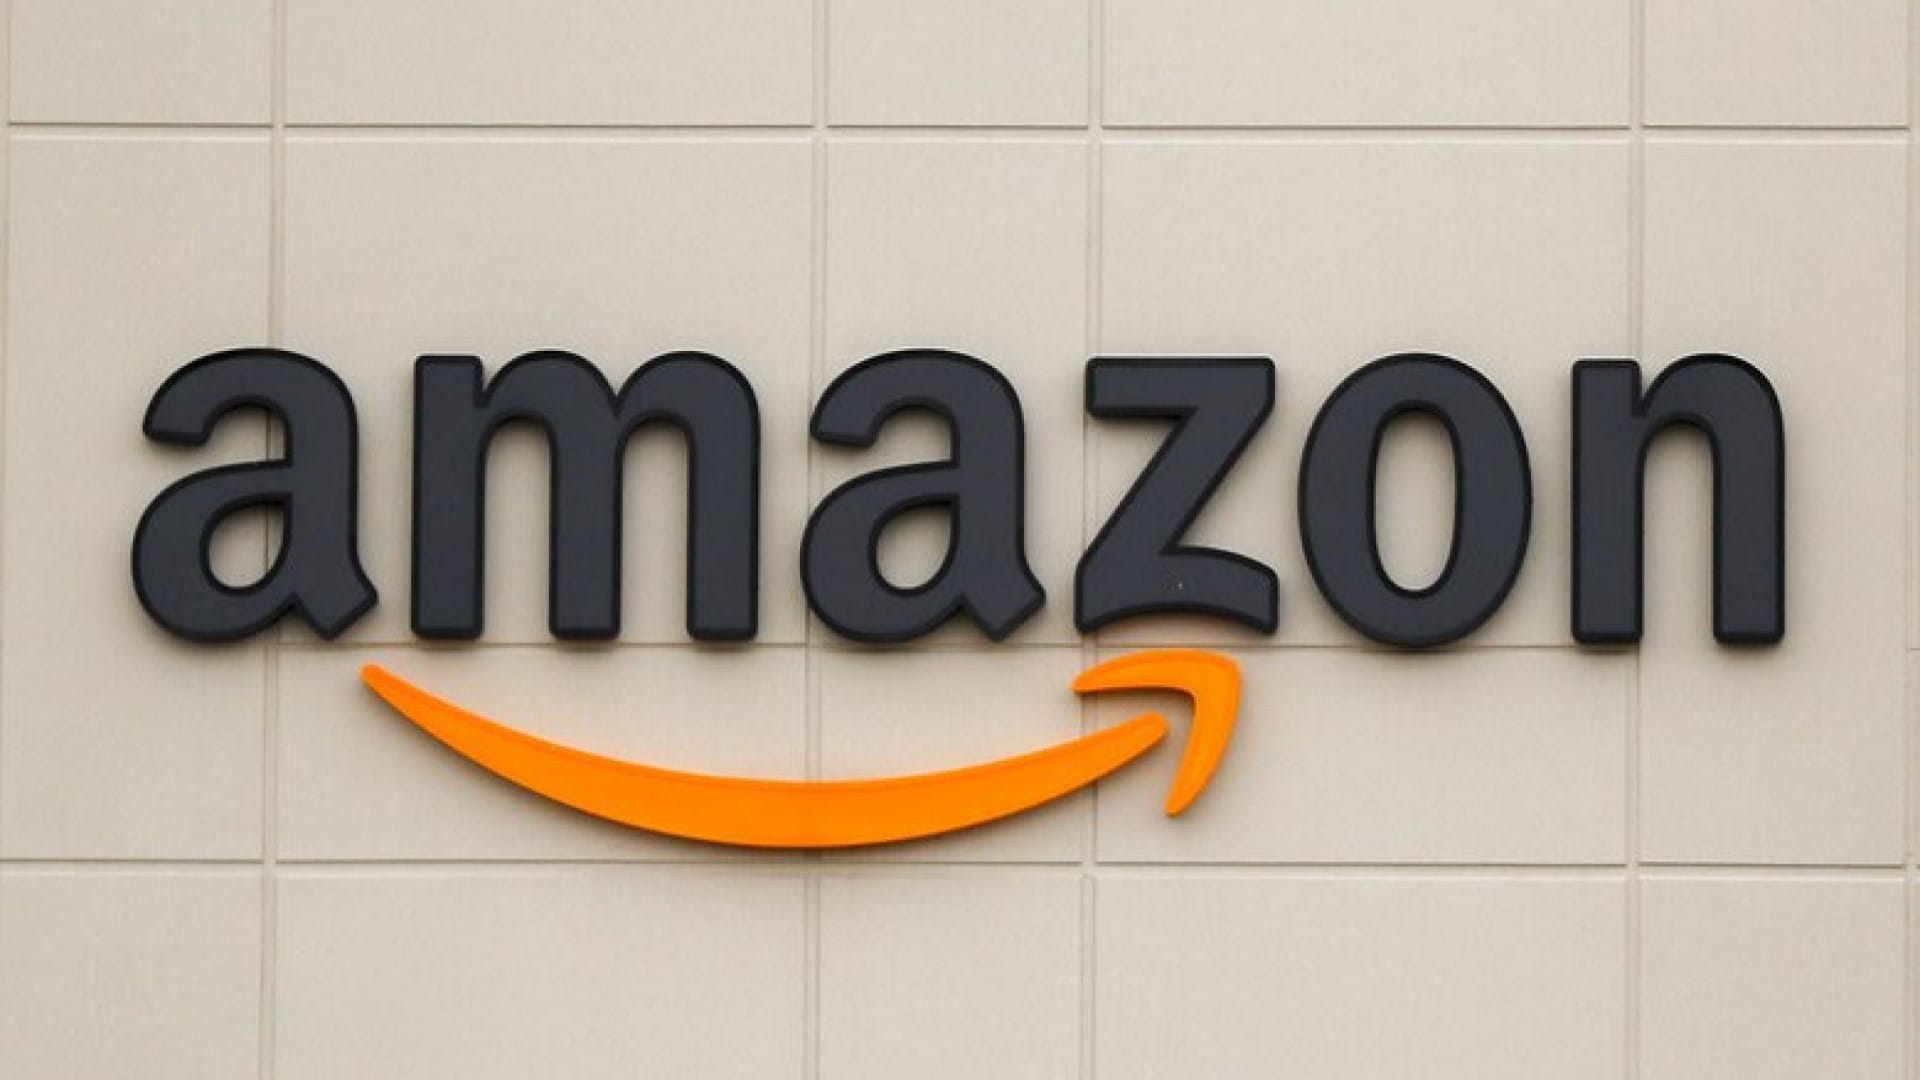 The Amazon logo as seen on a building